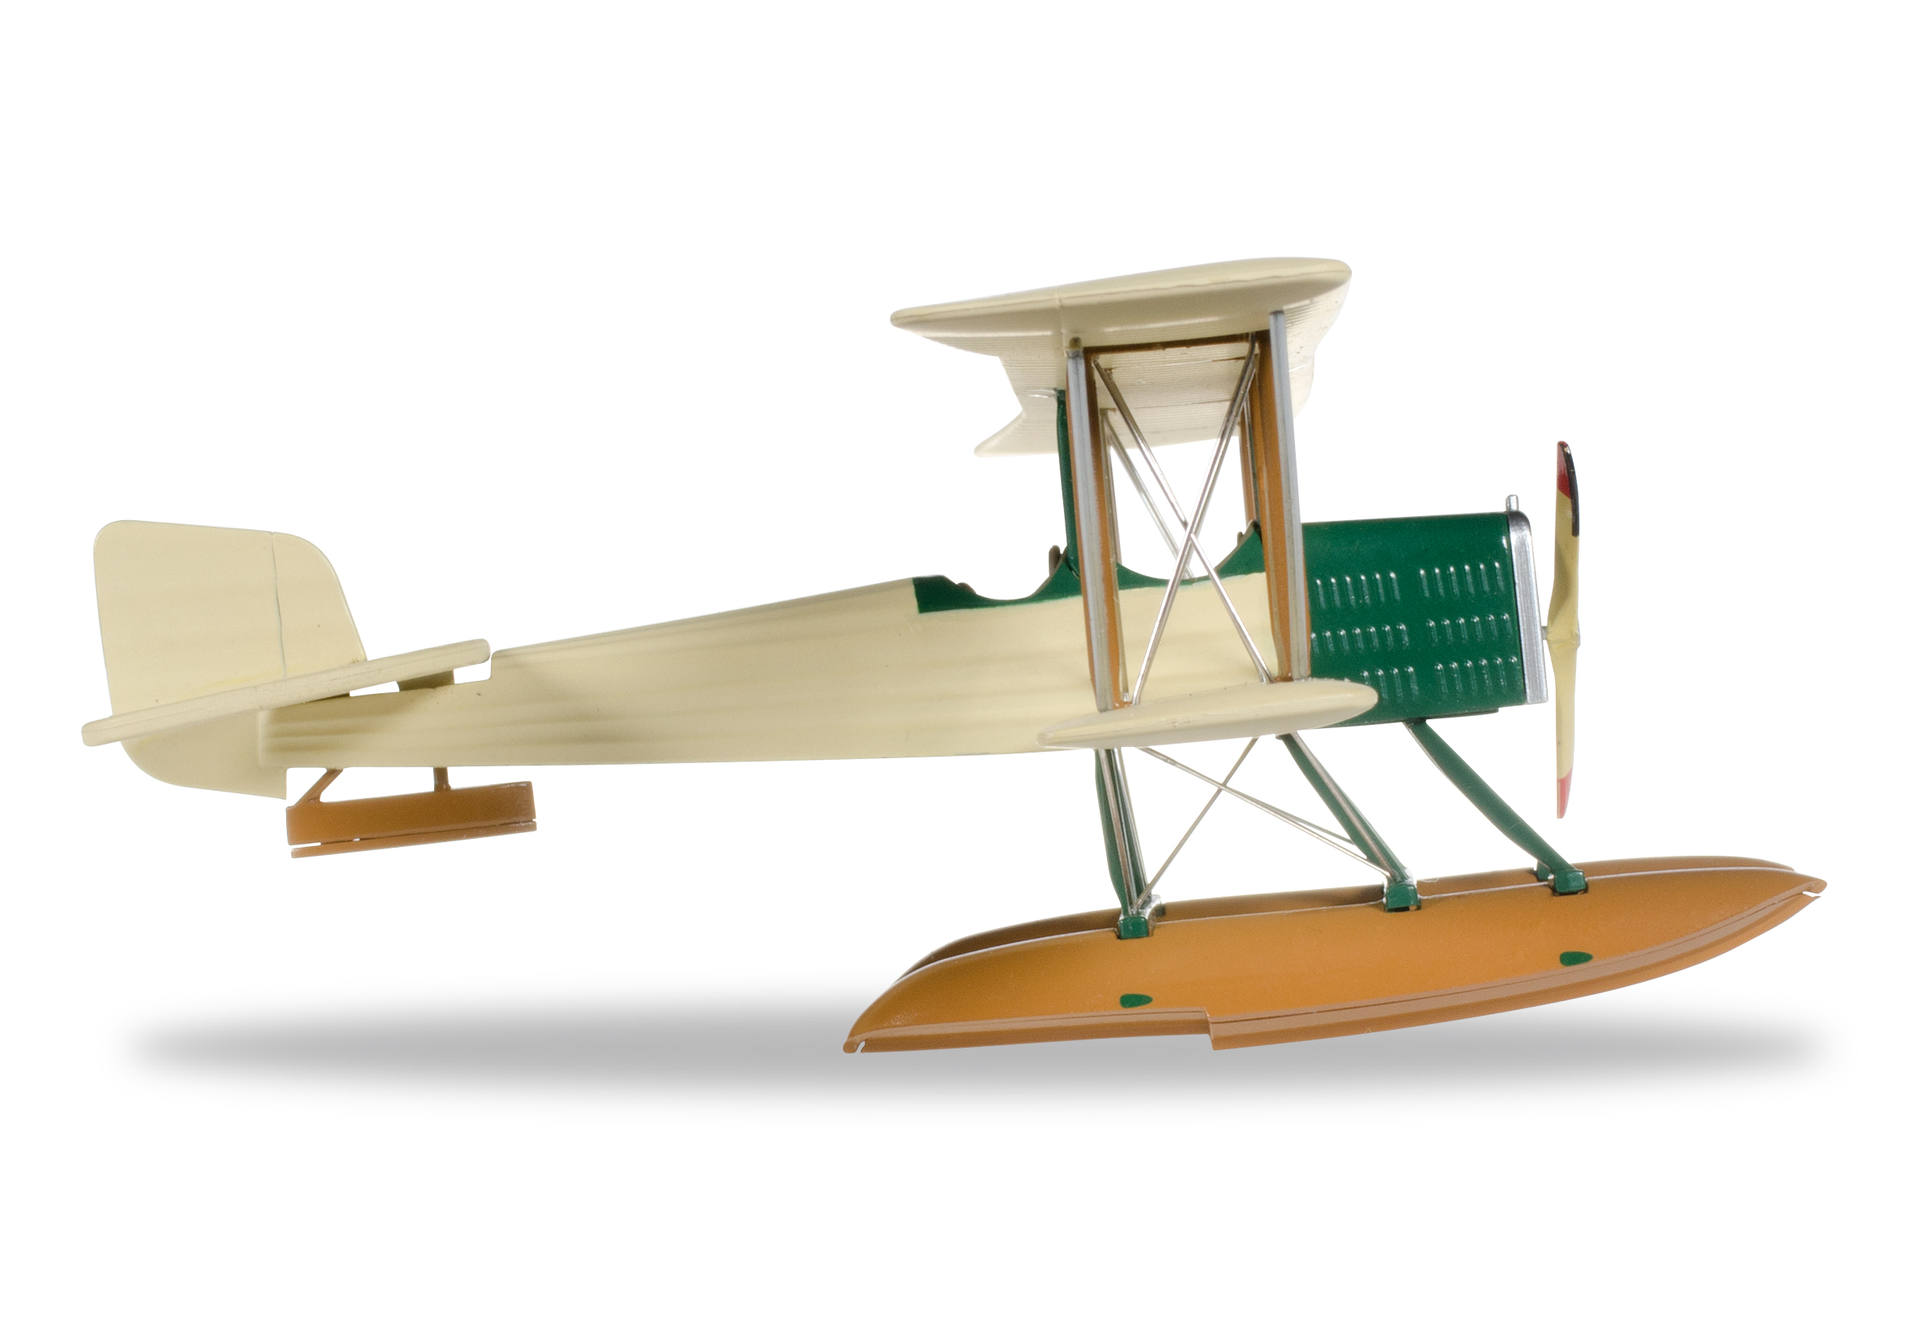 Boeing & Westervelt Model 1 ("B&W")